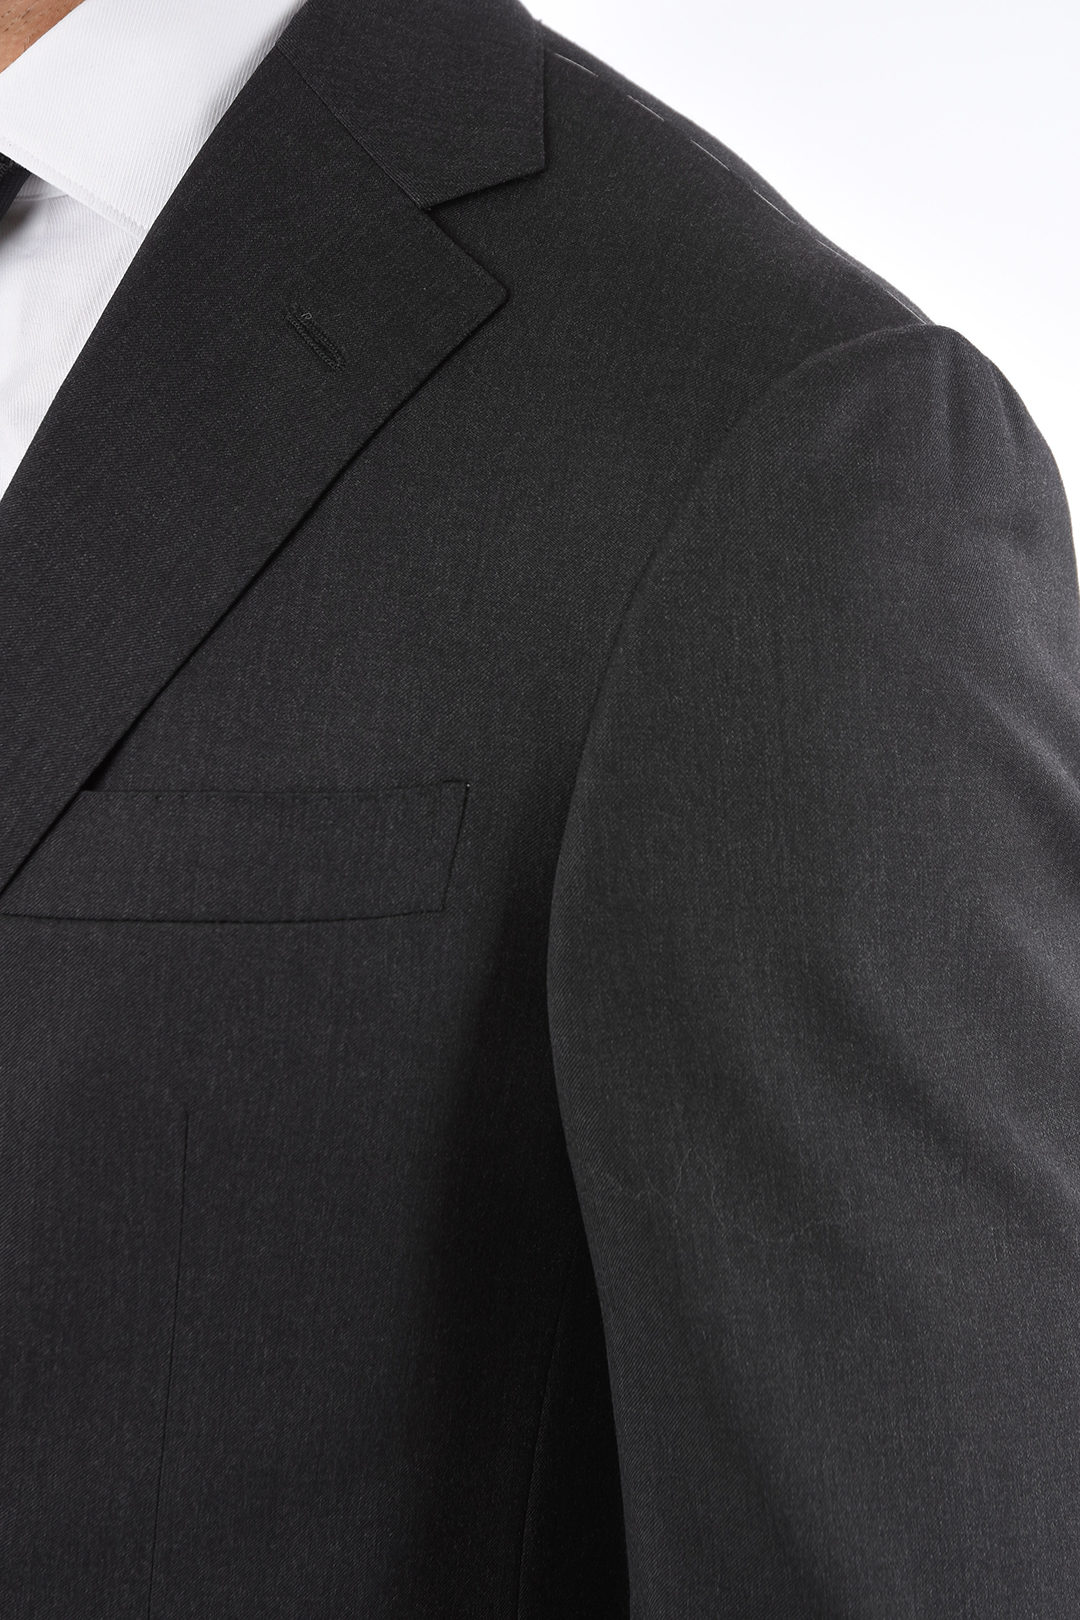 Corneliani Super 120's ACADEMY Suit men - Glamood Outlet